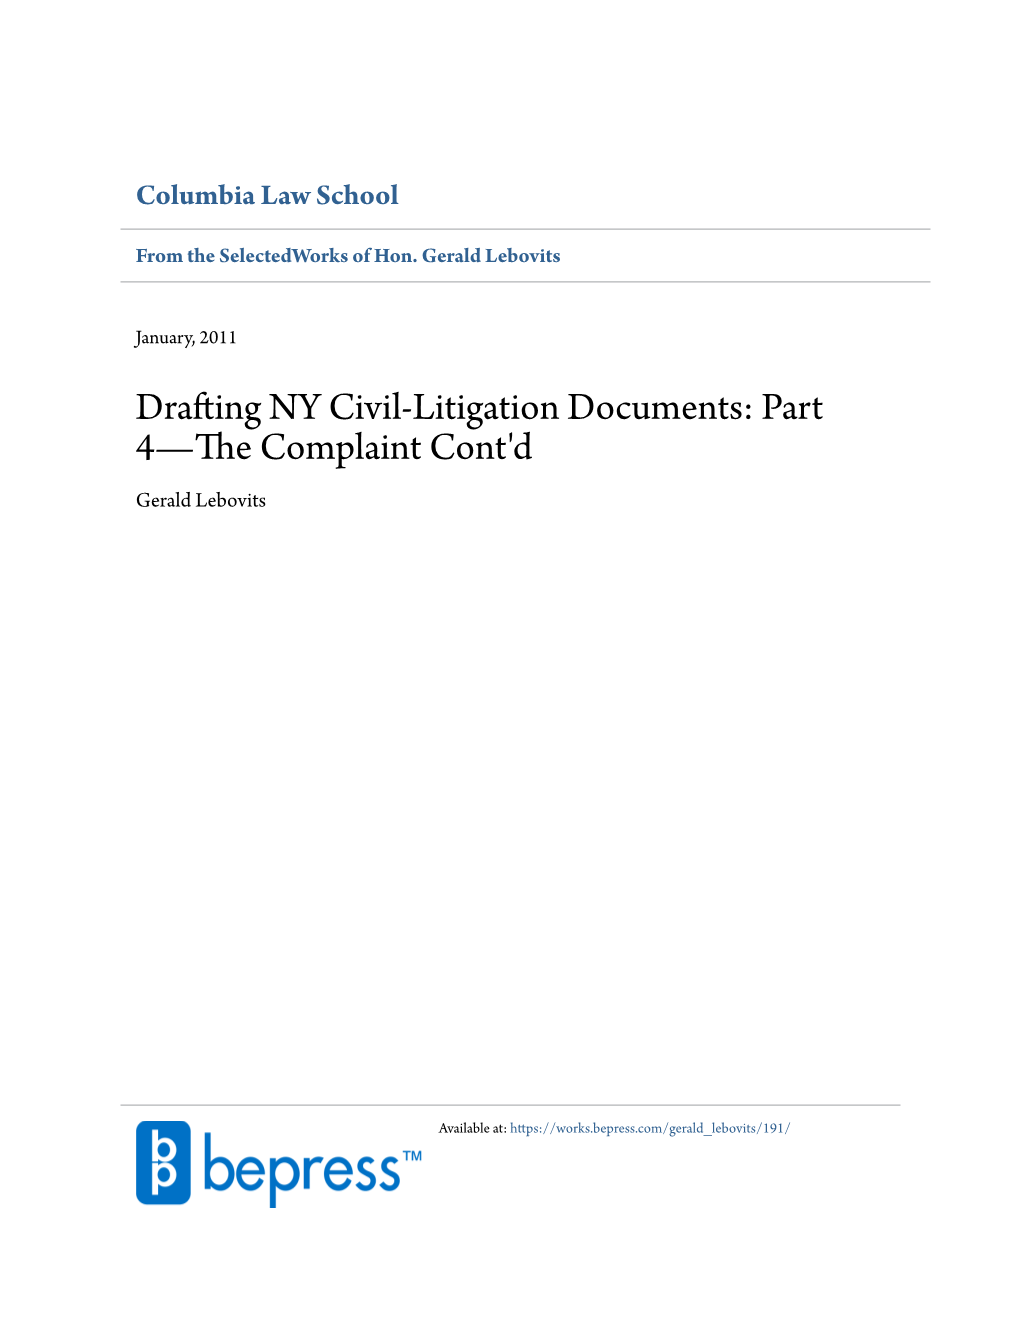 Drafting NY Civil-Litigation Documents: Part 4—The Complaint Cont'd